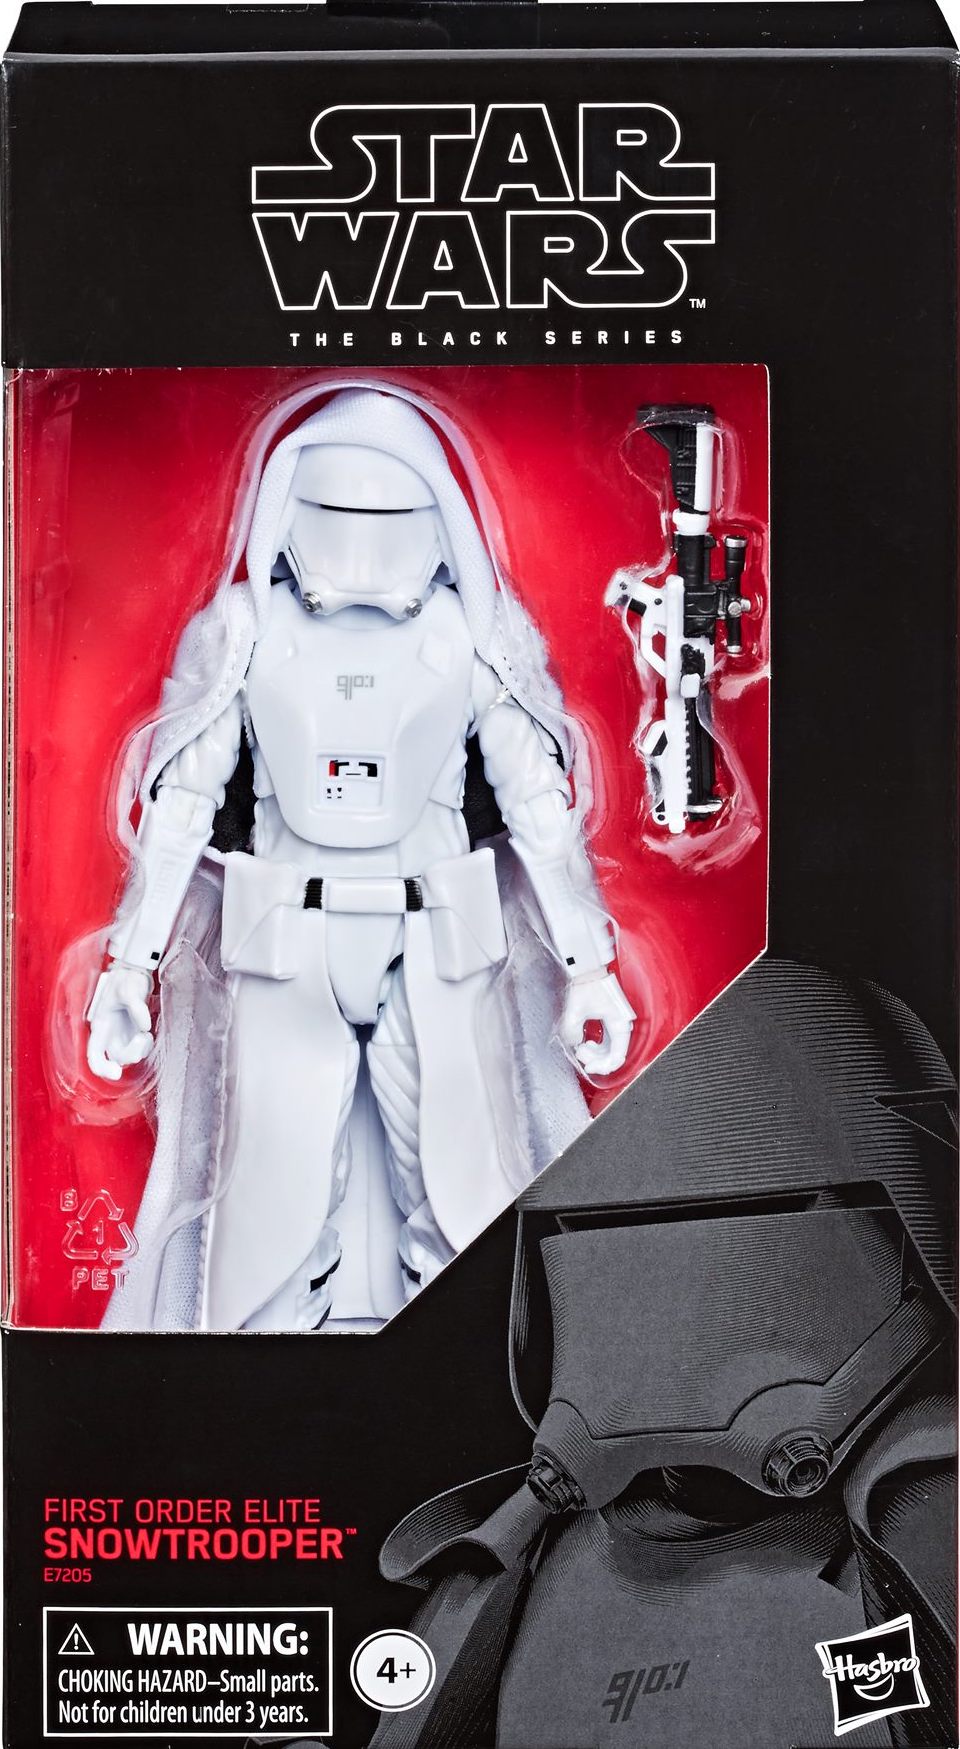 2015 MIB Hasbro Star Wars Black Series Luke Skywalker for sale online 